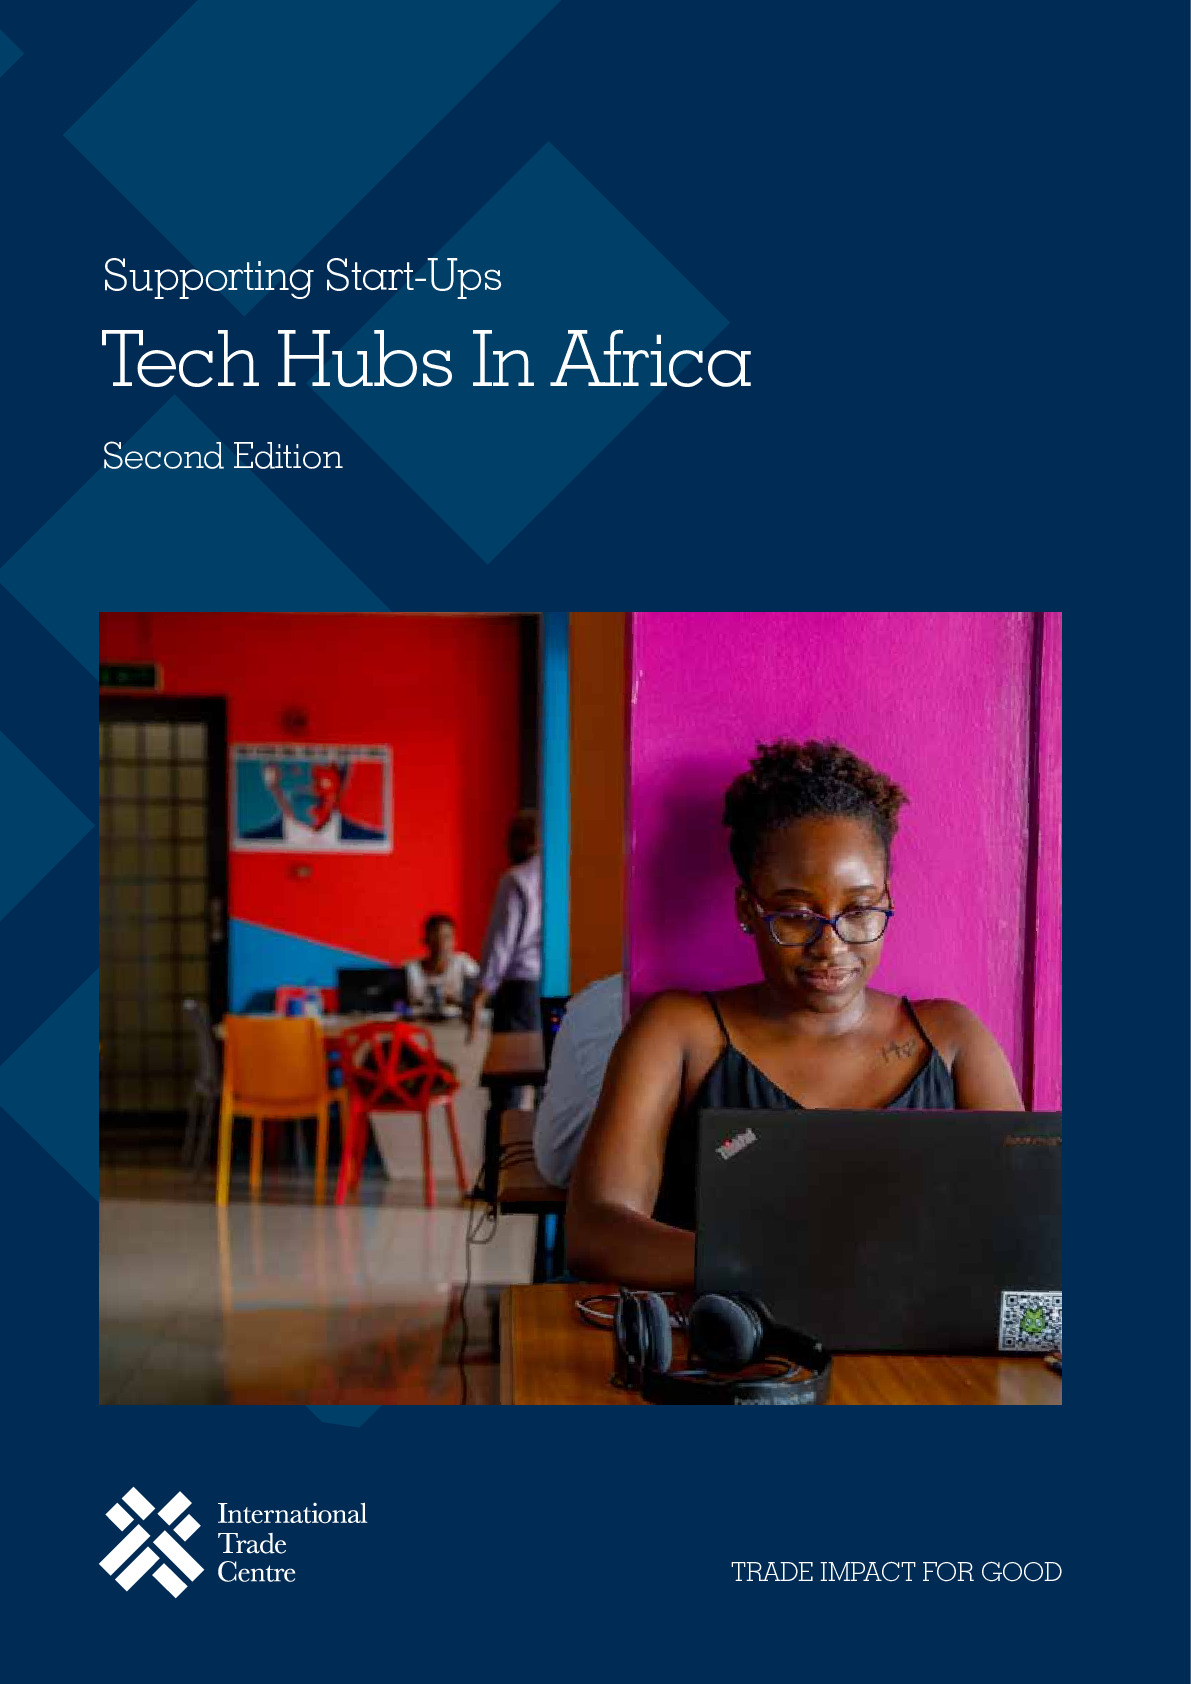 itc_techhubs_africa_folder_20200701_web02